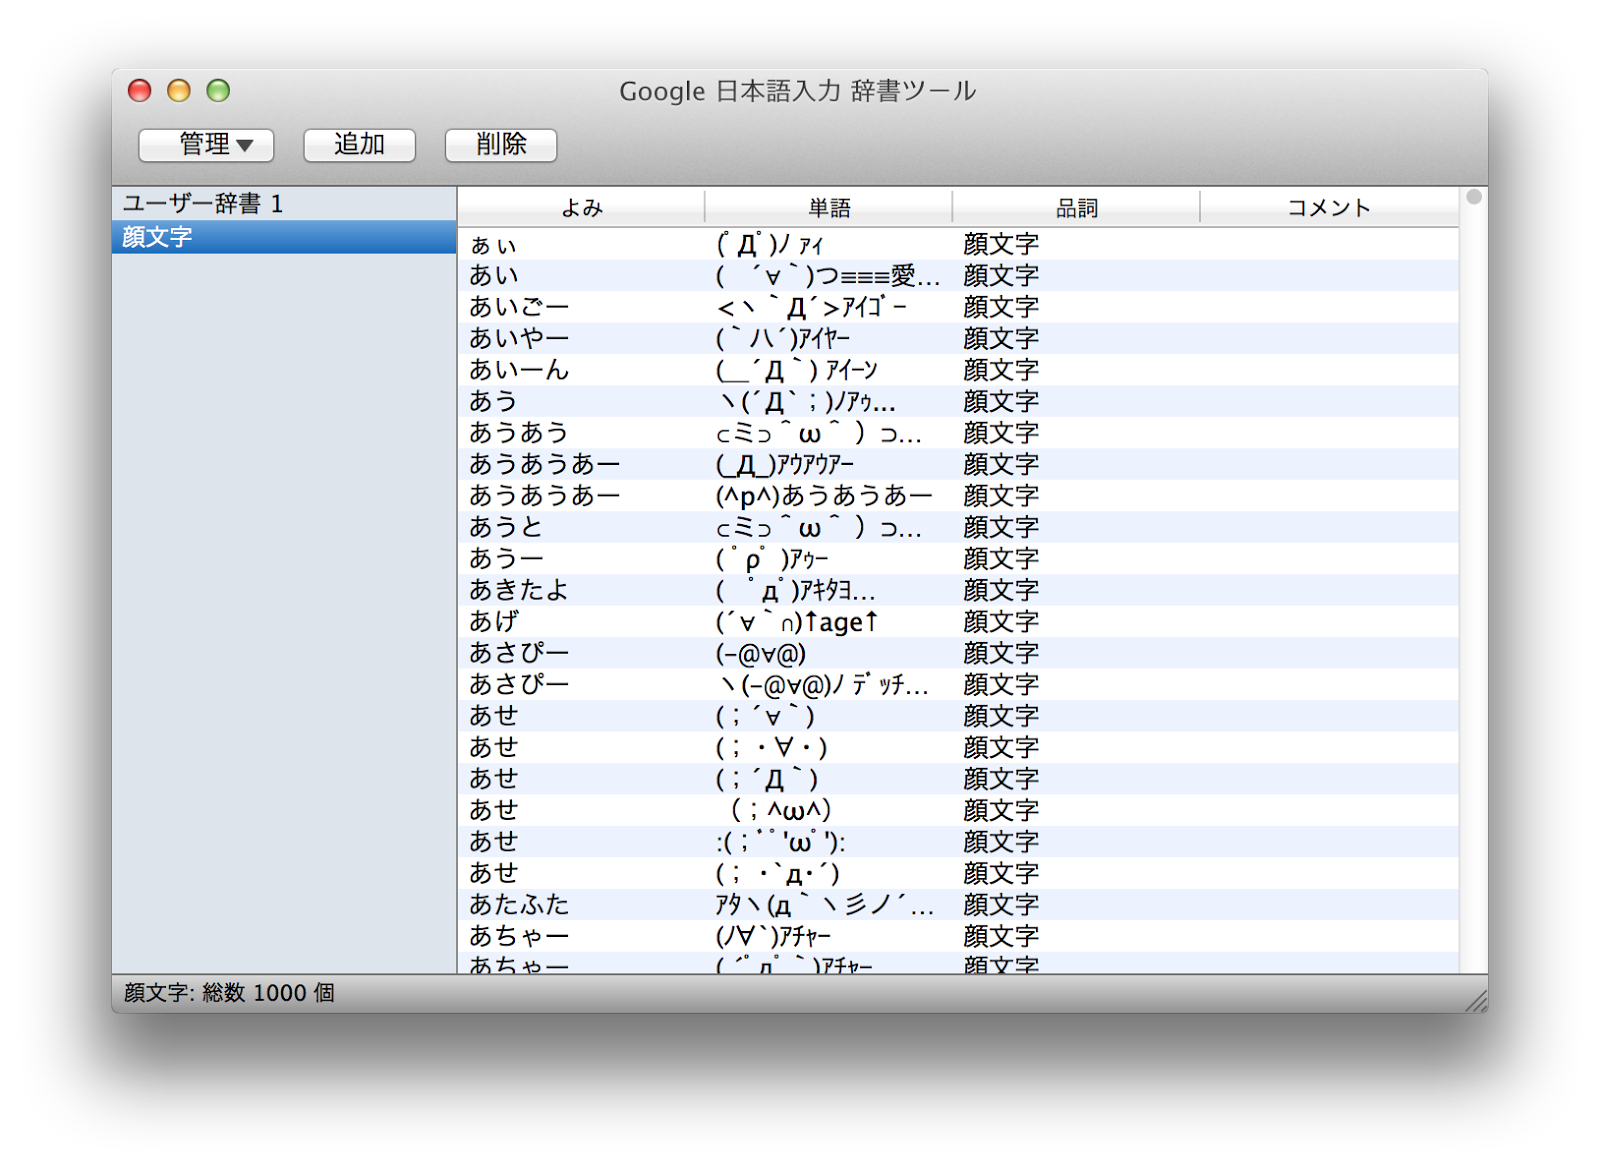 I Skyd 顔文字を大幅追加 2ちゃんねる顔文字辞書をgoogle日本語入力に入れてみた